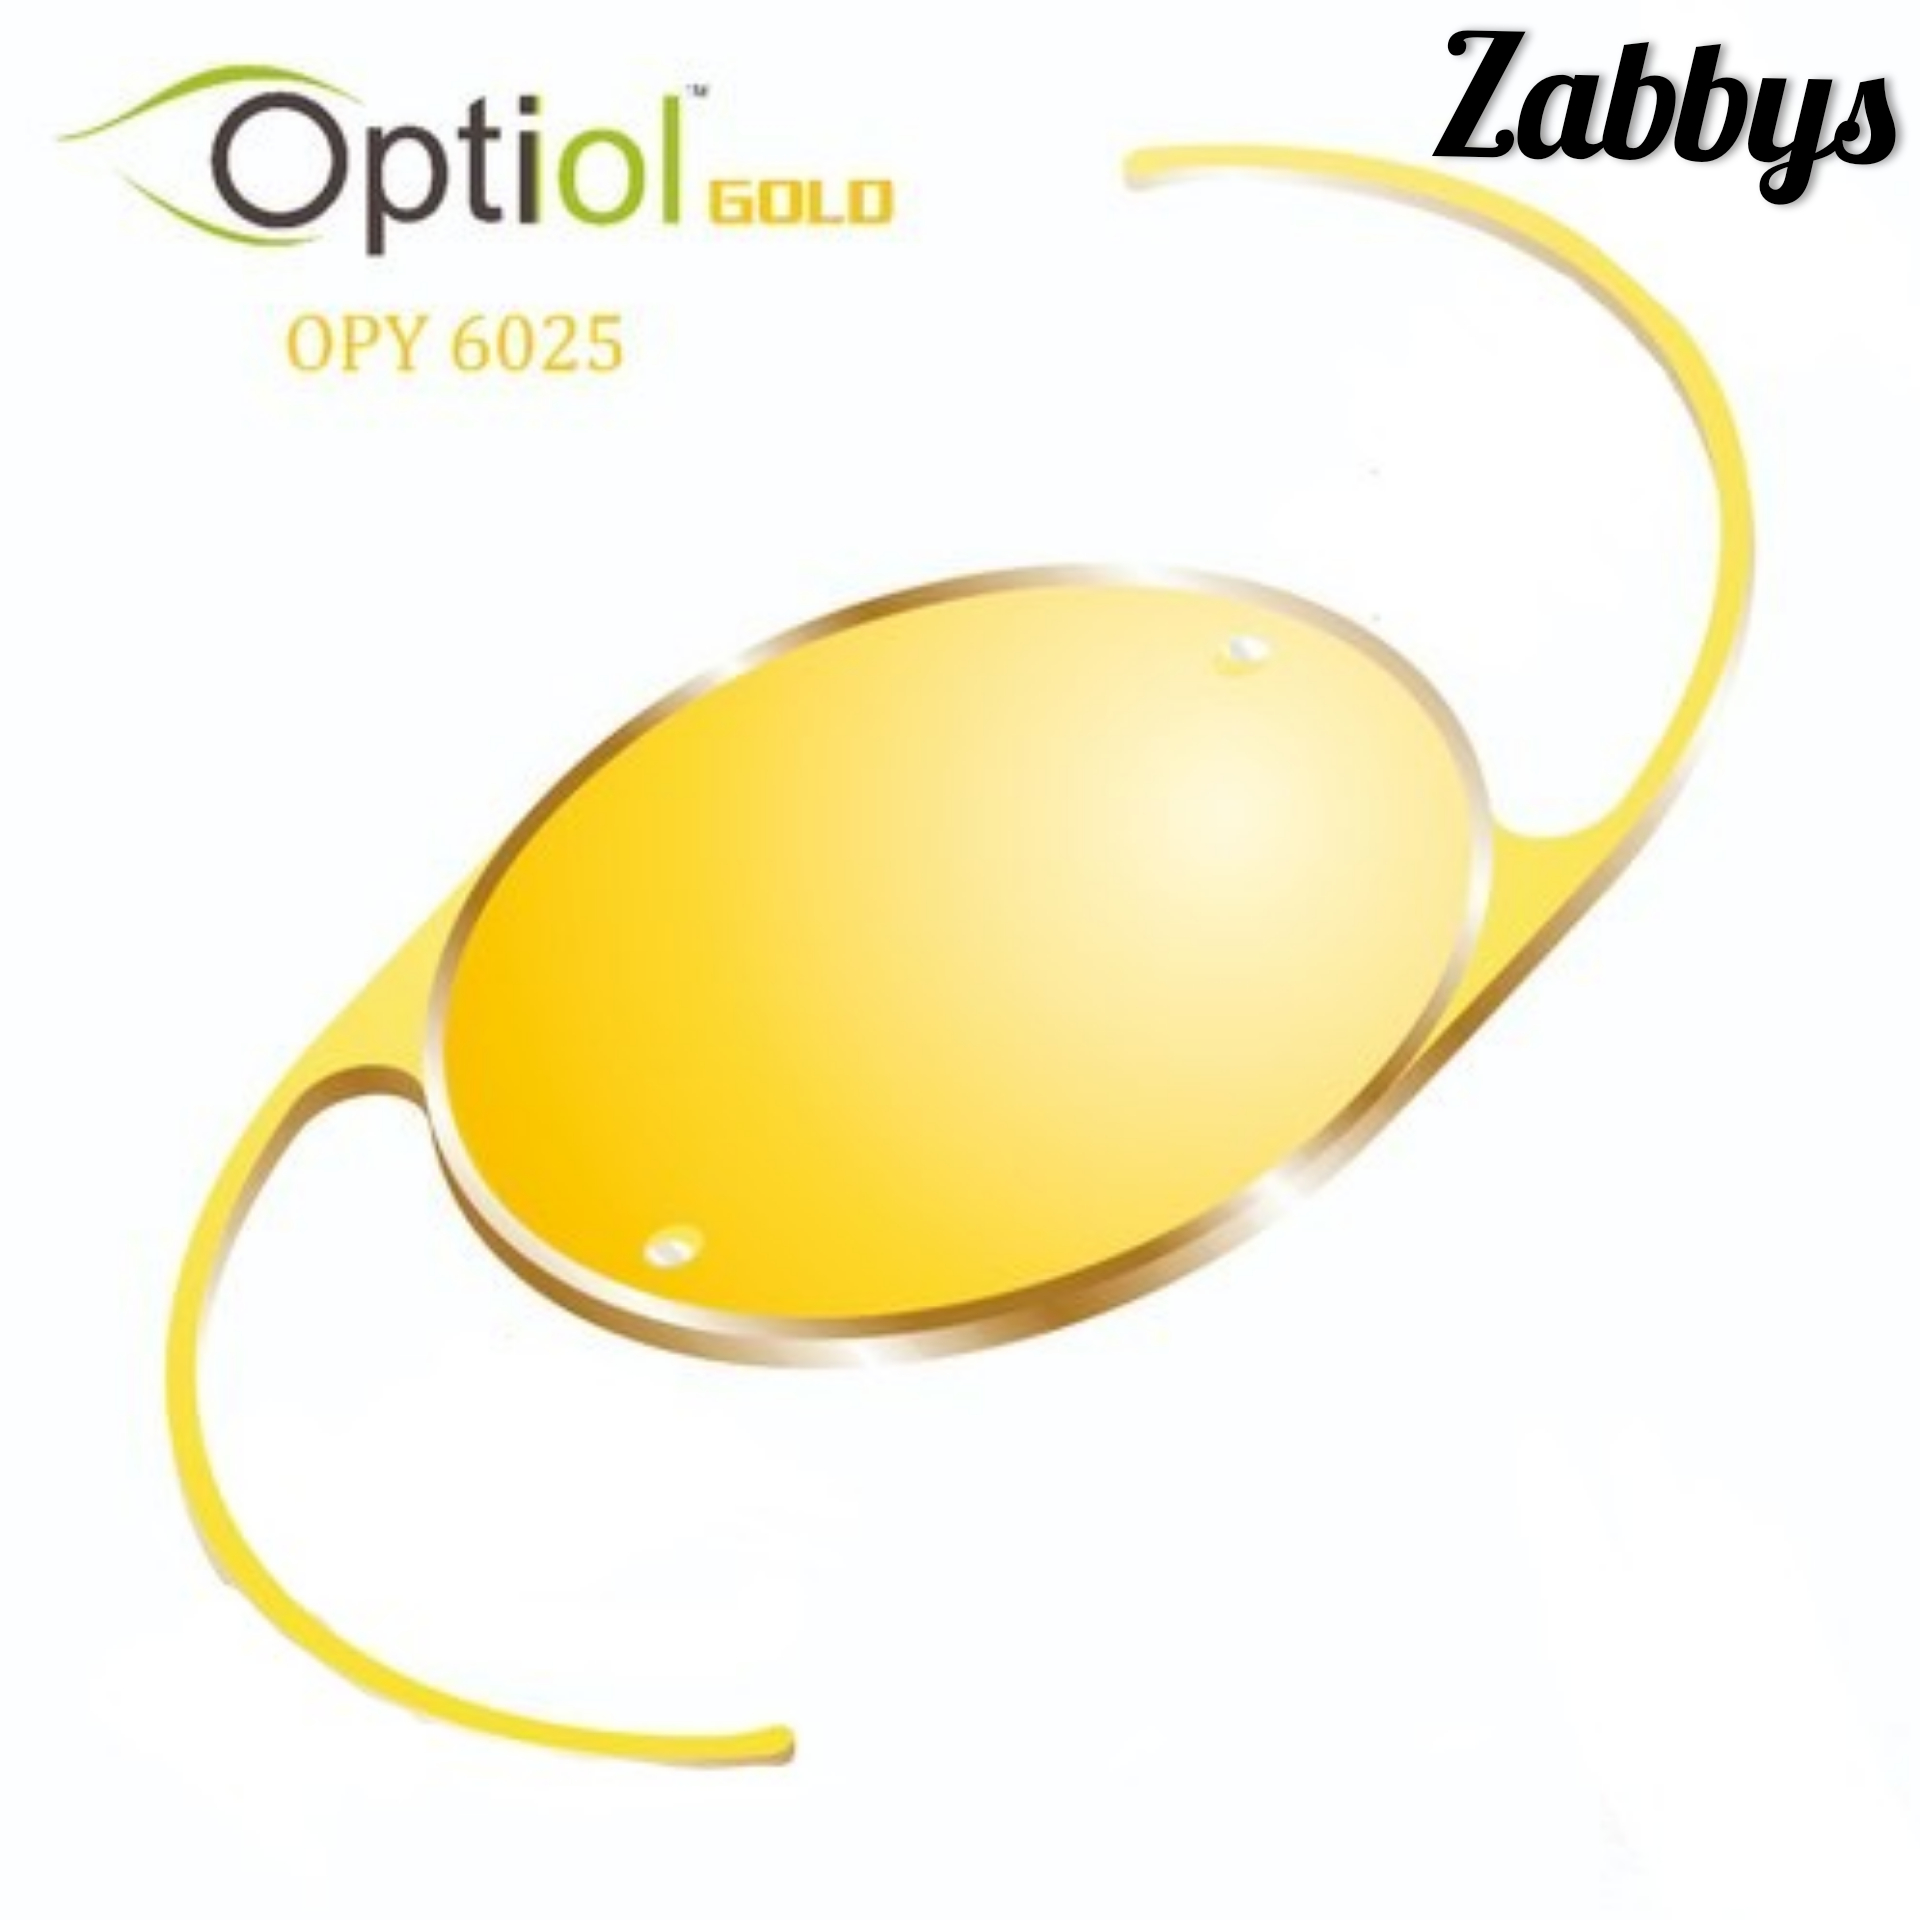 Zabbys Optiol Gold